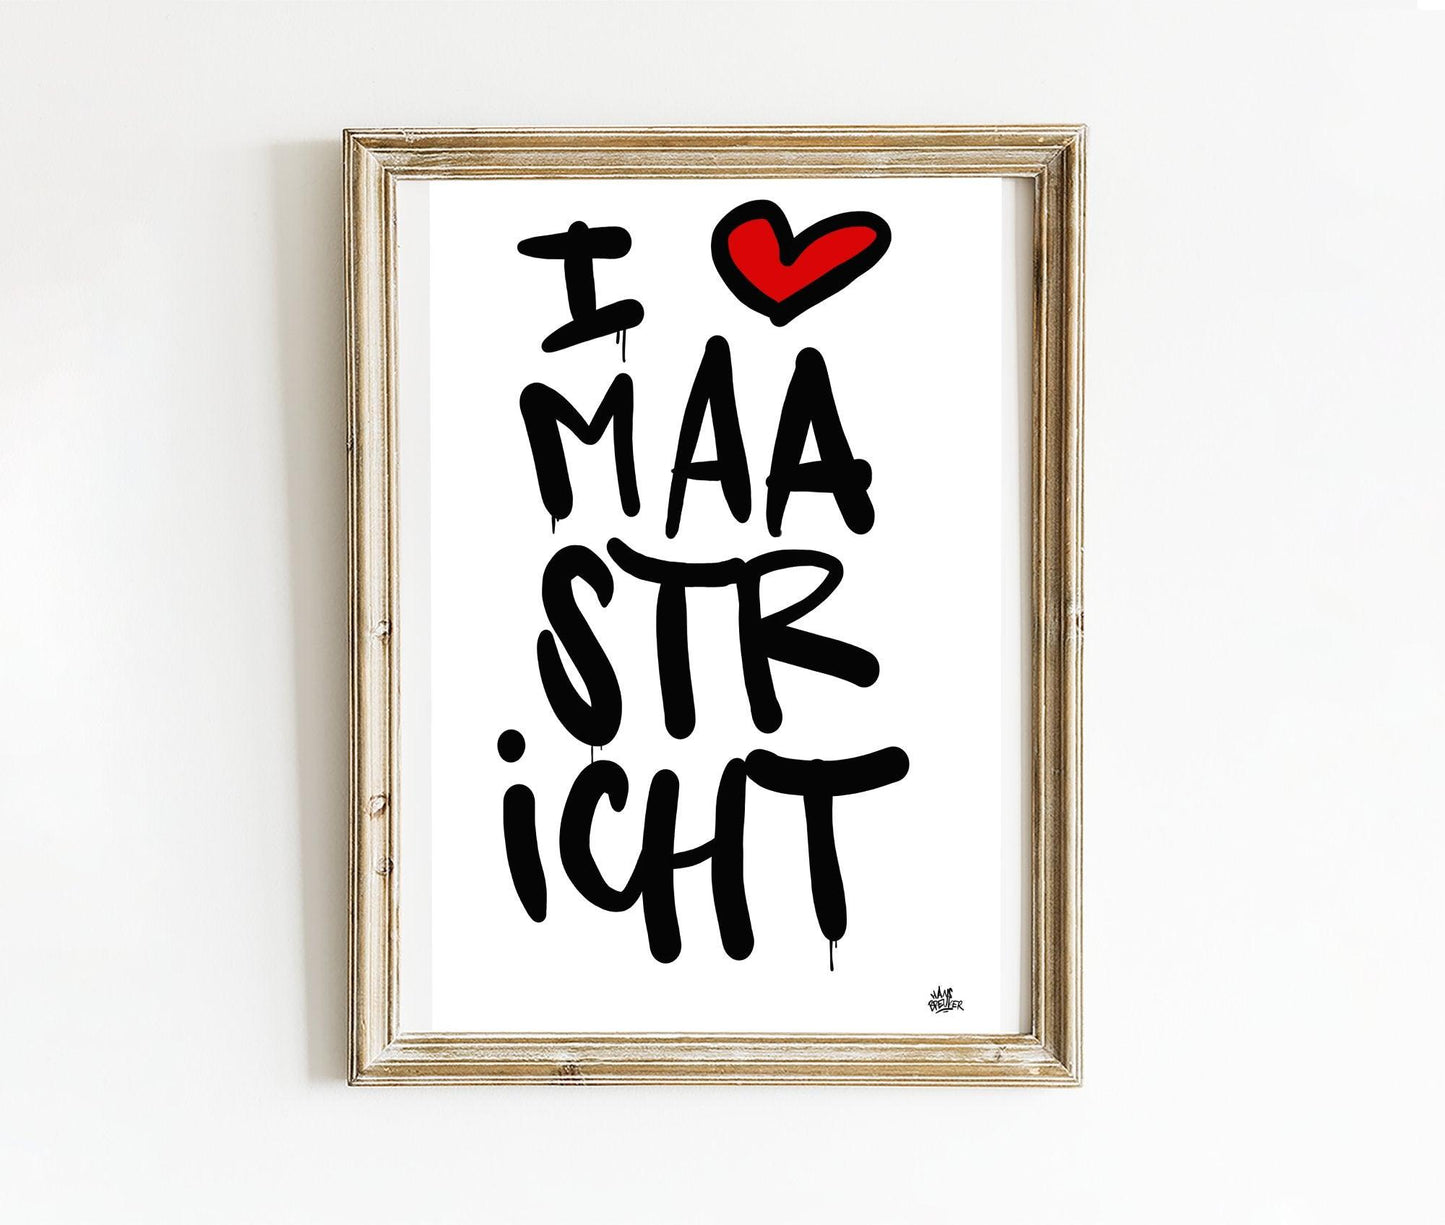 Poster Maastricht - Hans Breuker